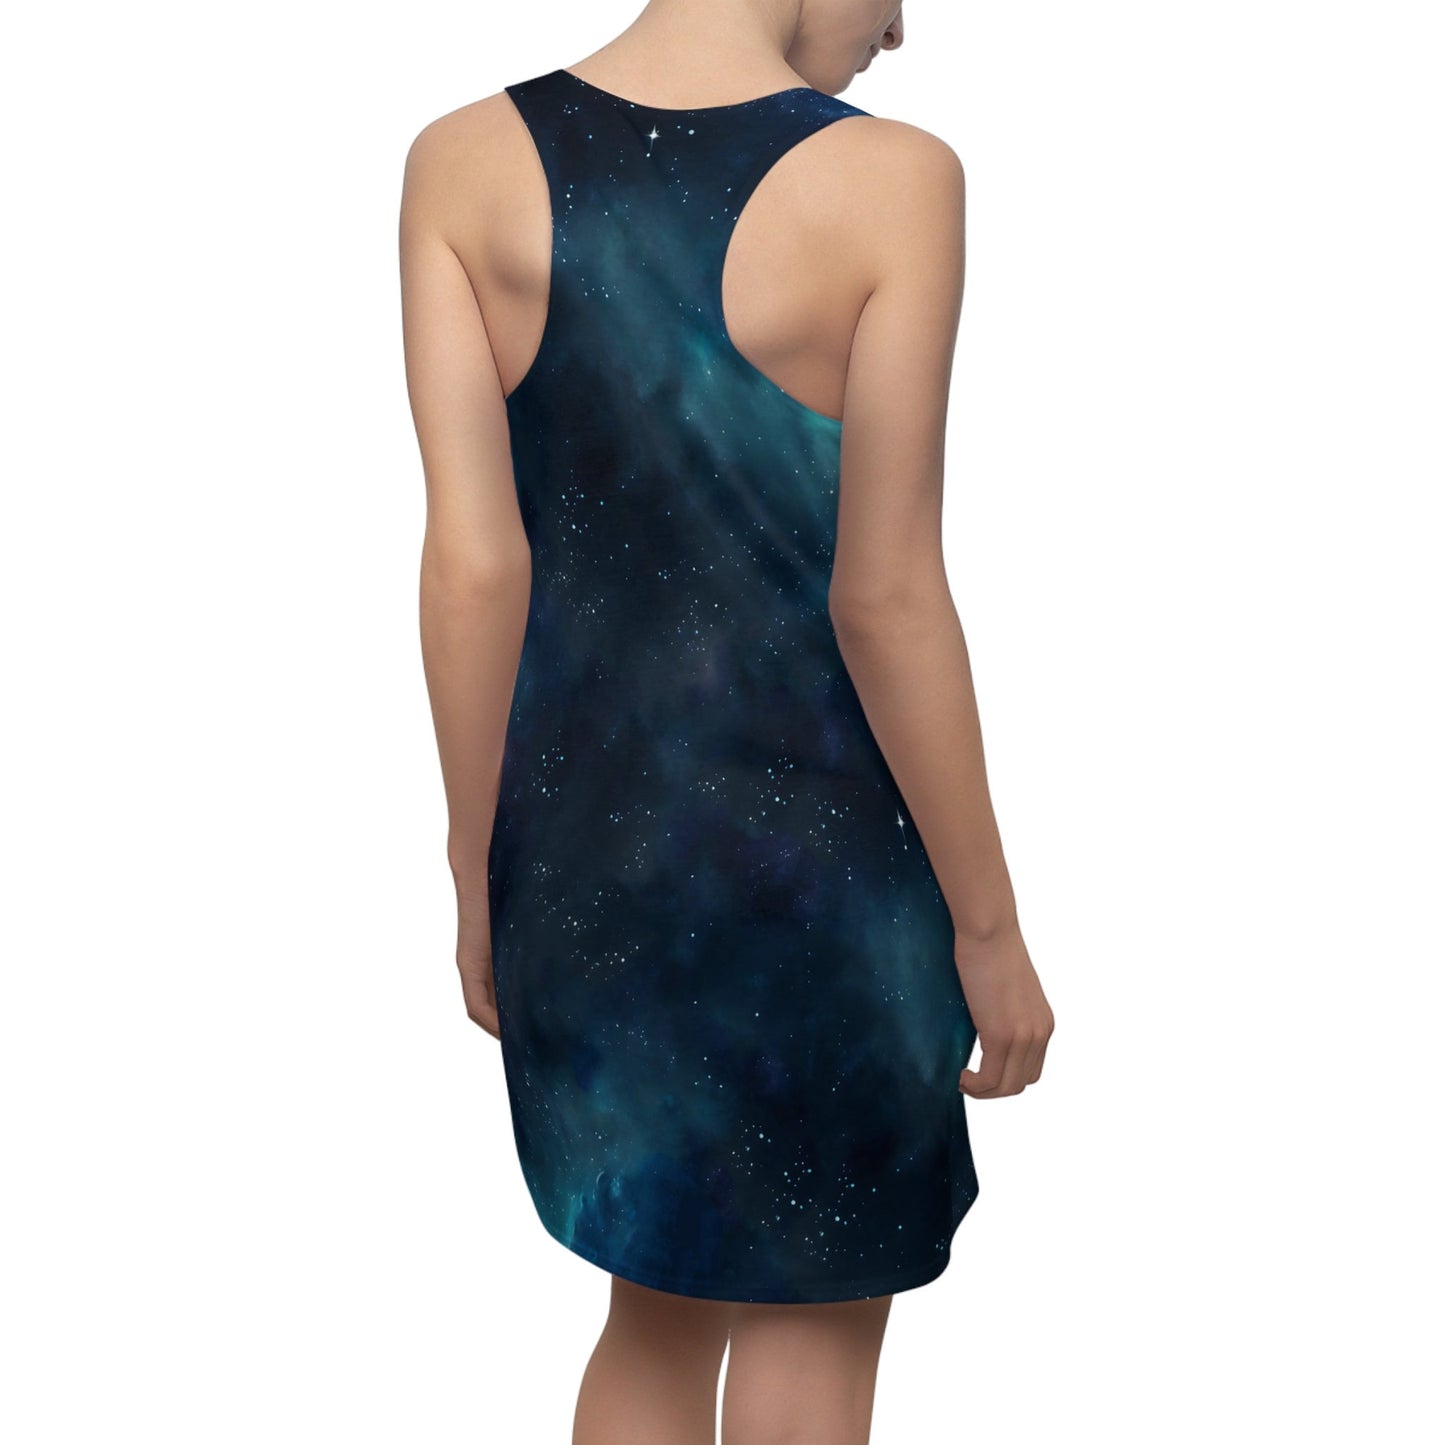 Metatron's Cube Dress sacred geometry sleeveless dress blue galaxy summer racerback dress